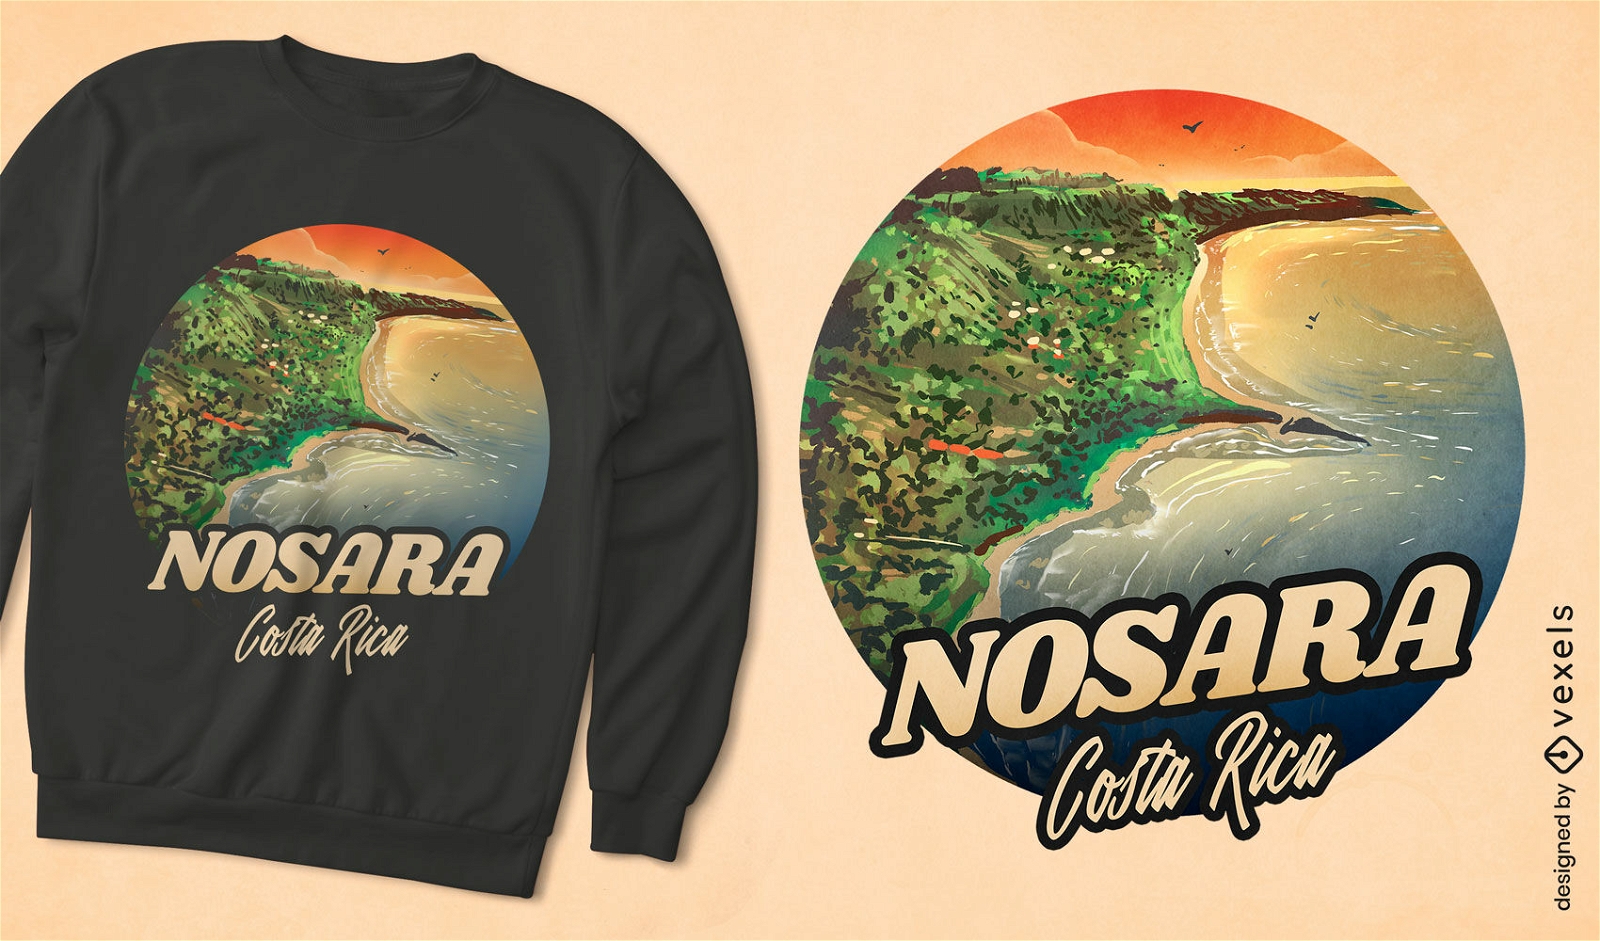 Nosara Costa Rica touristisches T-Shirt-Design